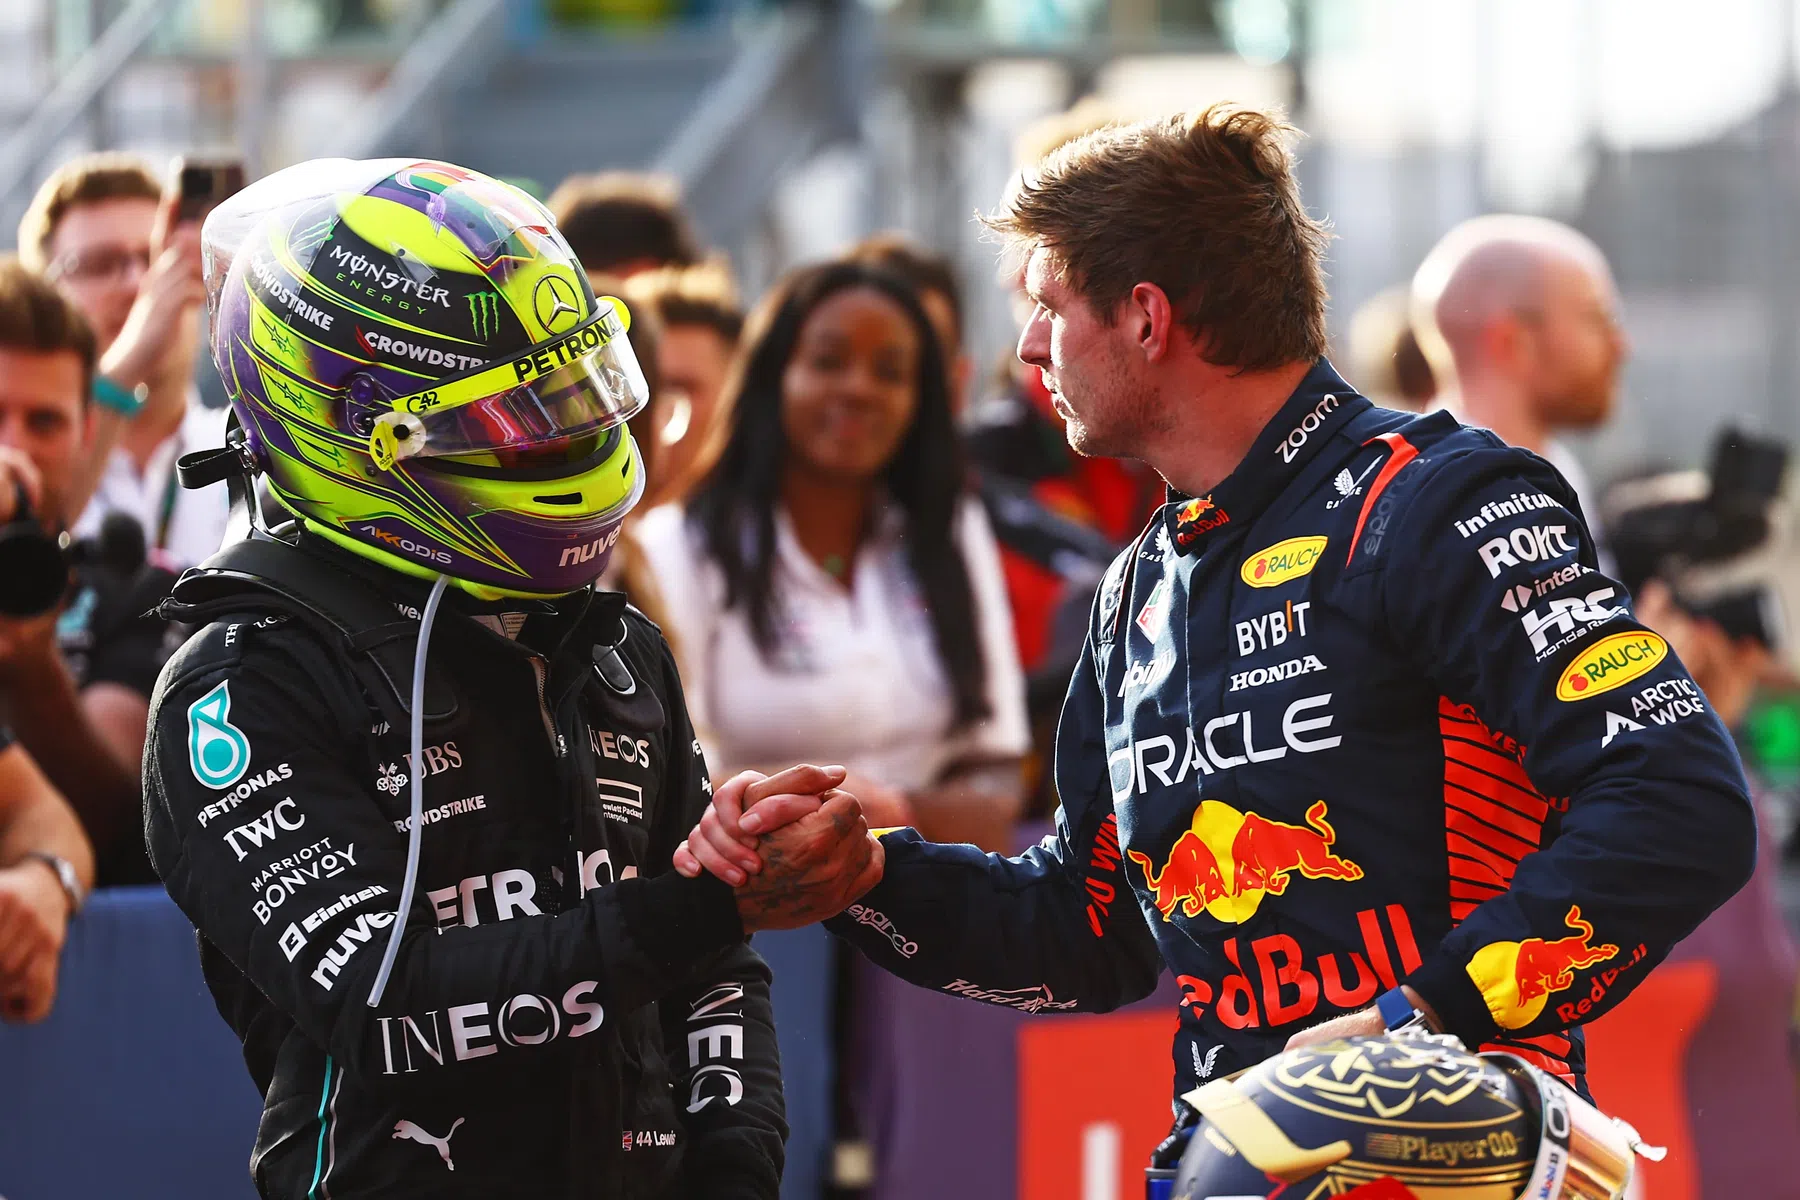 Verstappen fala sobre rivalidade com Hamilton: Somos caras normais